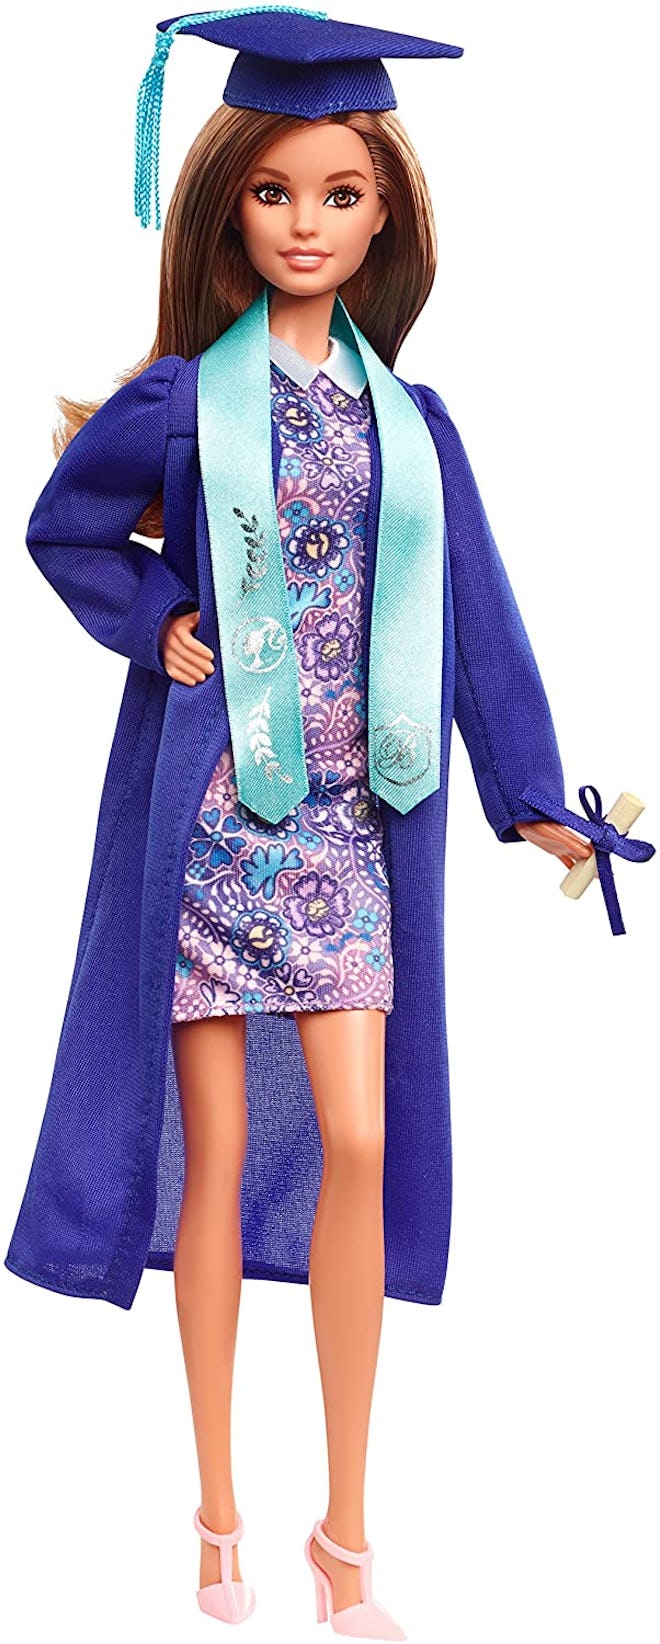 Kindergarten graduation gift ideas; Barbie wearing cap and gown